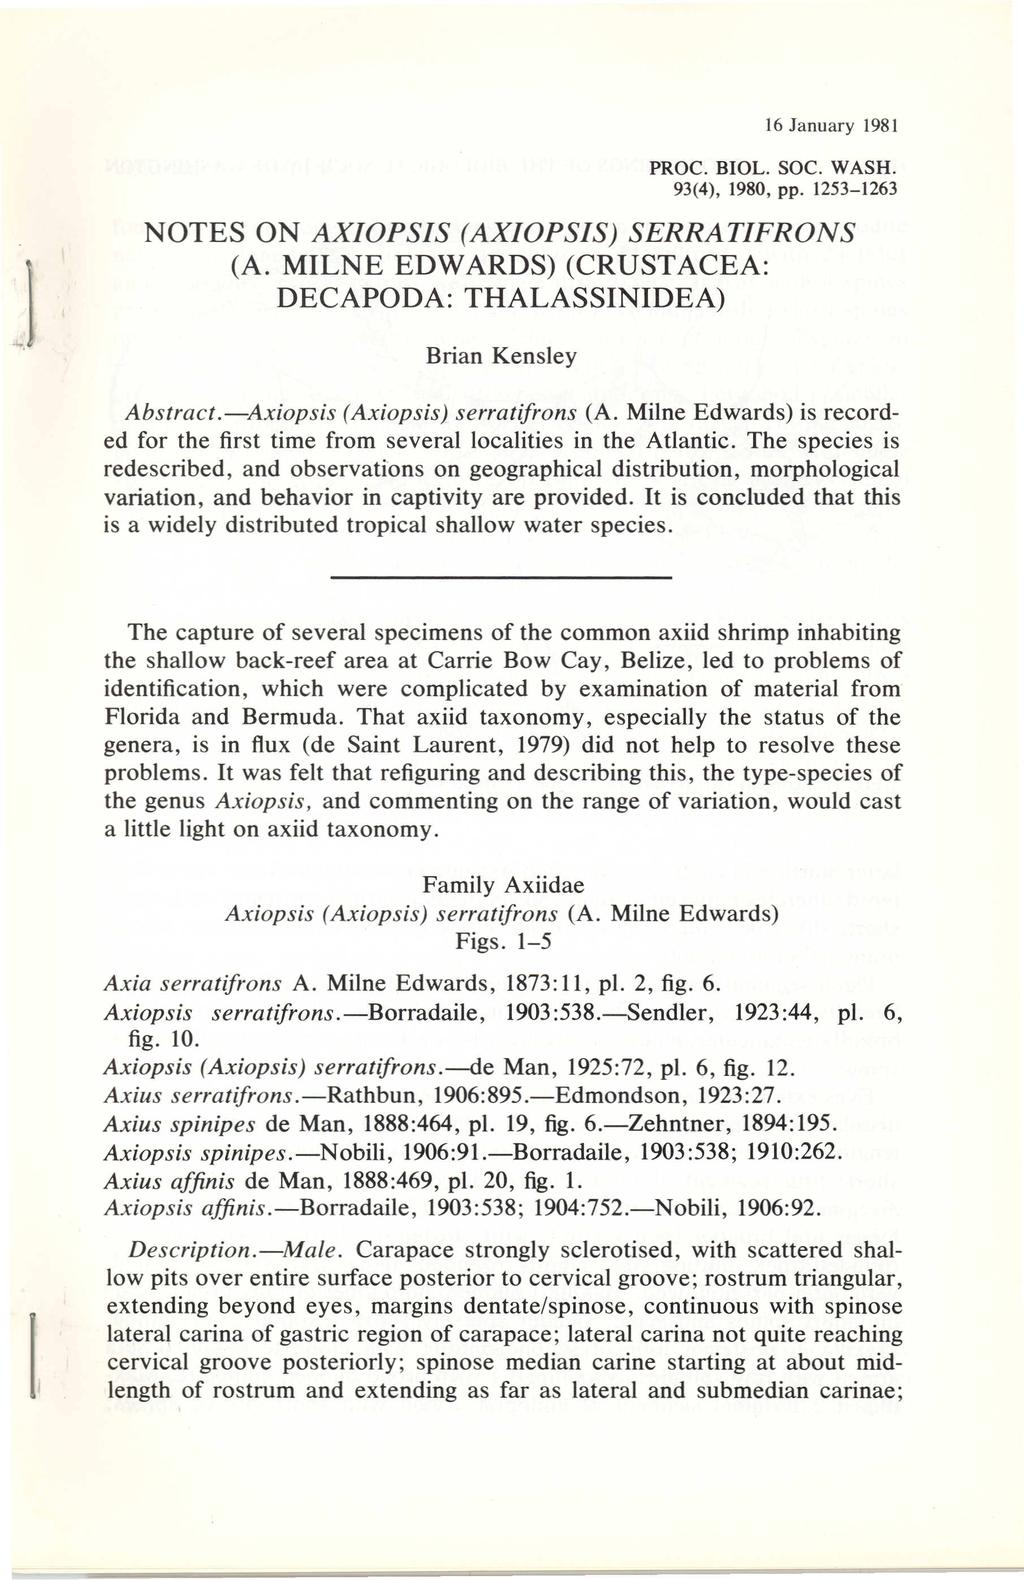 PROC. BIOL. SOC. WASH. 93(4), 1980, pp. 1253-1263 NOTES ON AXIOPSIS (AXIOPSIS) SERRATIFRONS (A. MILNE EDWARDS) (CRUSTACEA: DECAPODA: THALASSINIDEA) Abstract.-Axiopsis (Axiopsis) serratifrons (A.